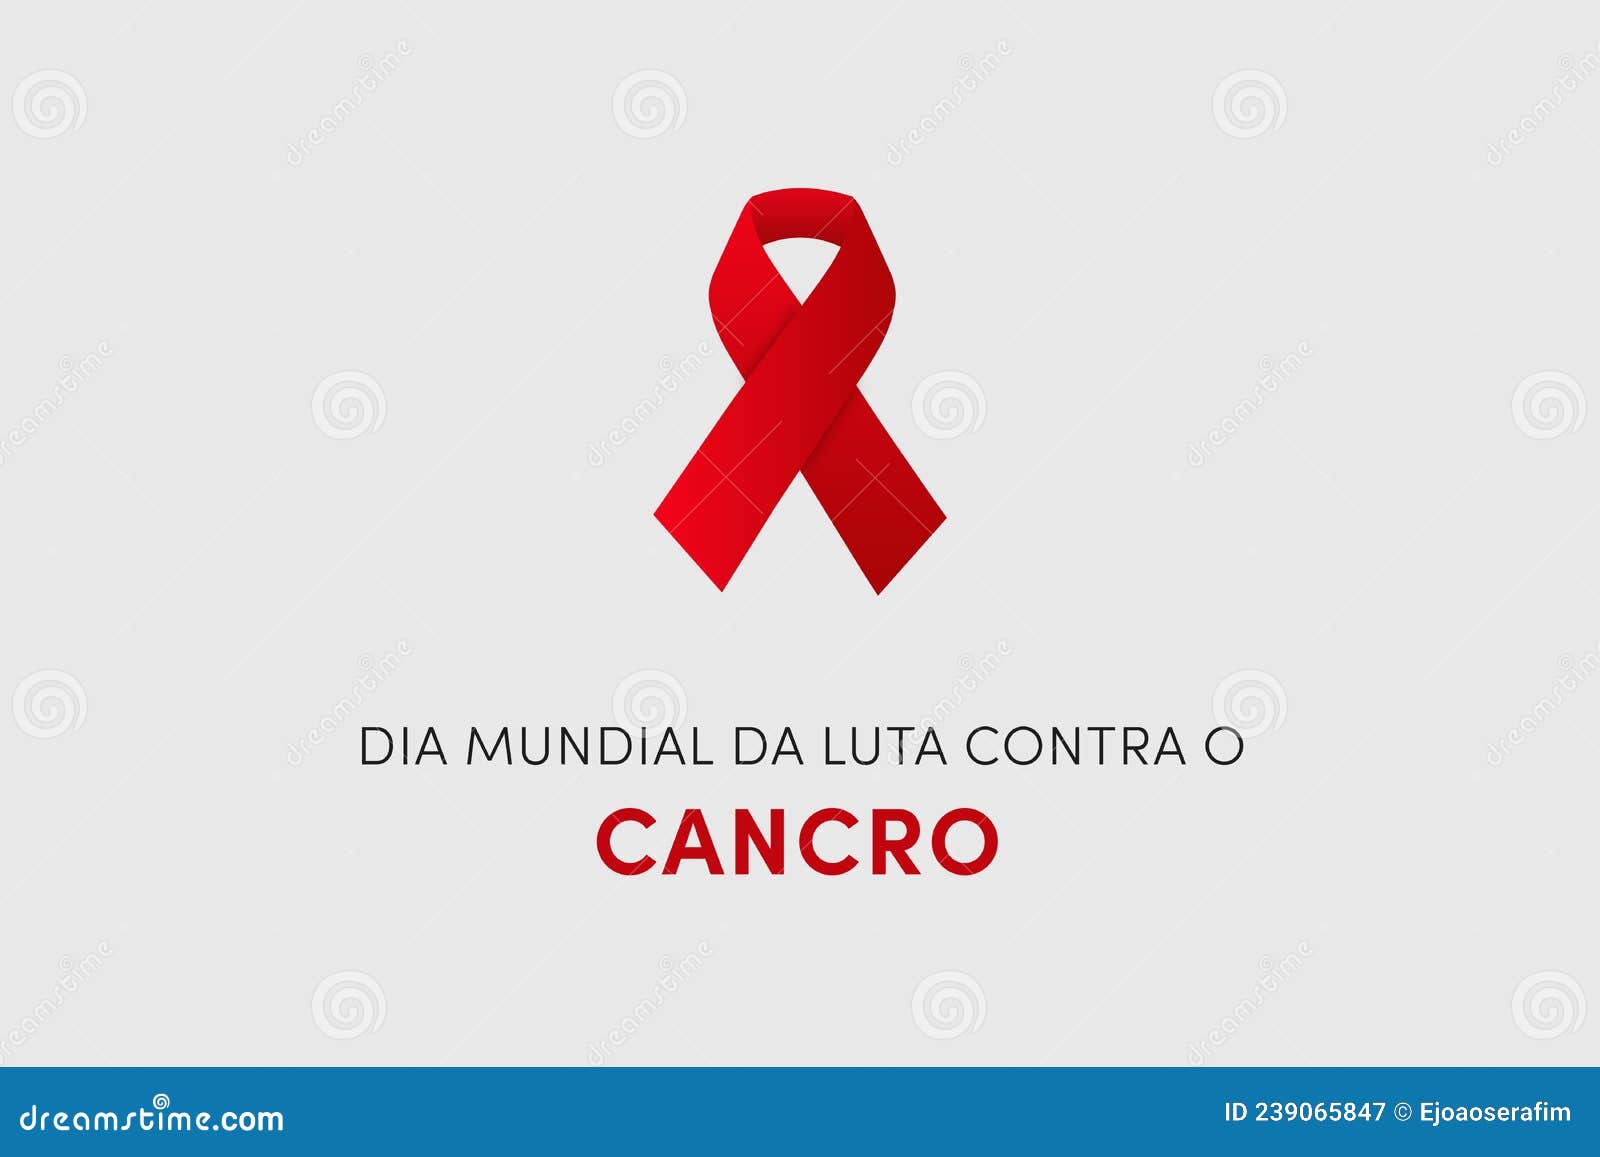 dia mundial da luta contra o cancro. translation: world cancer day, on february 4